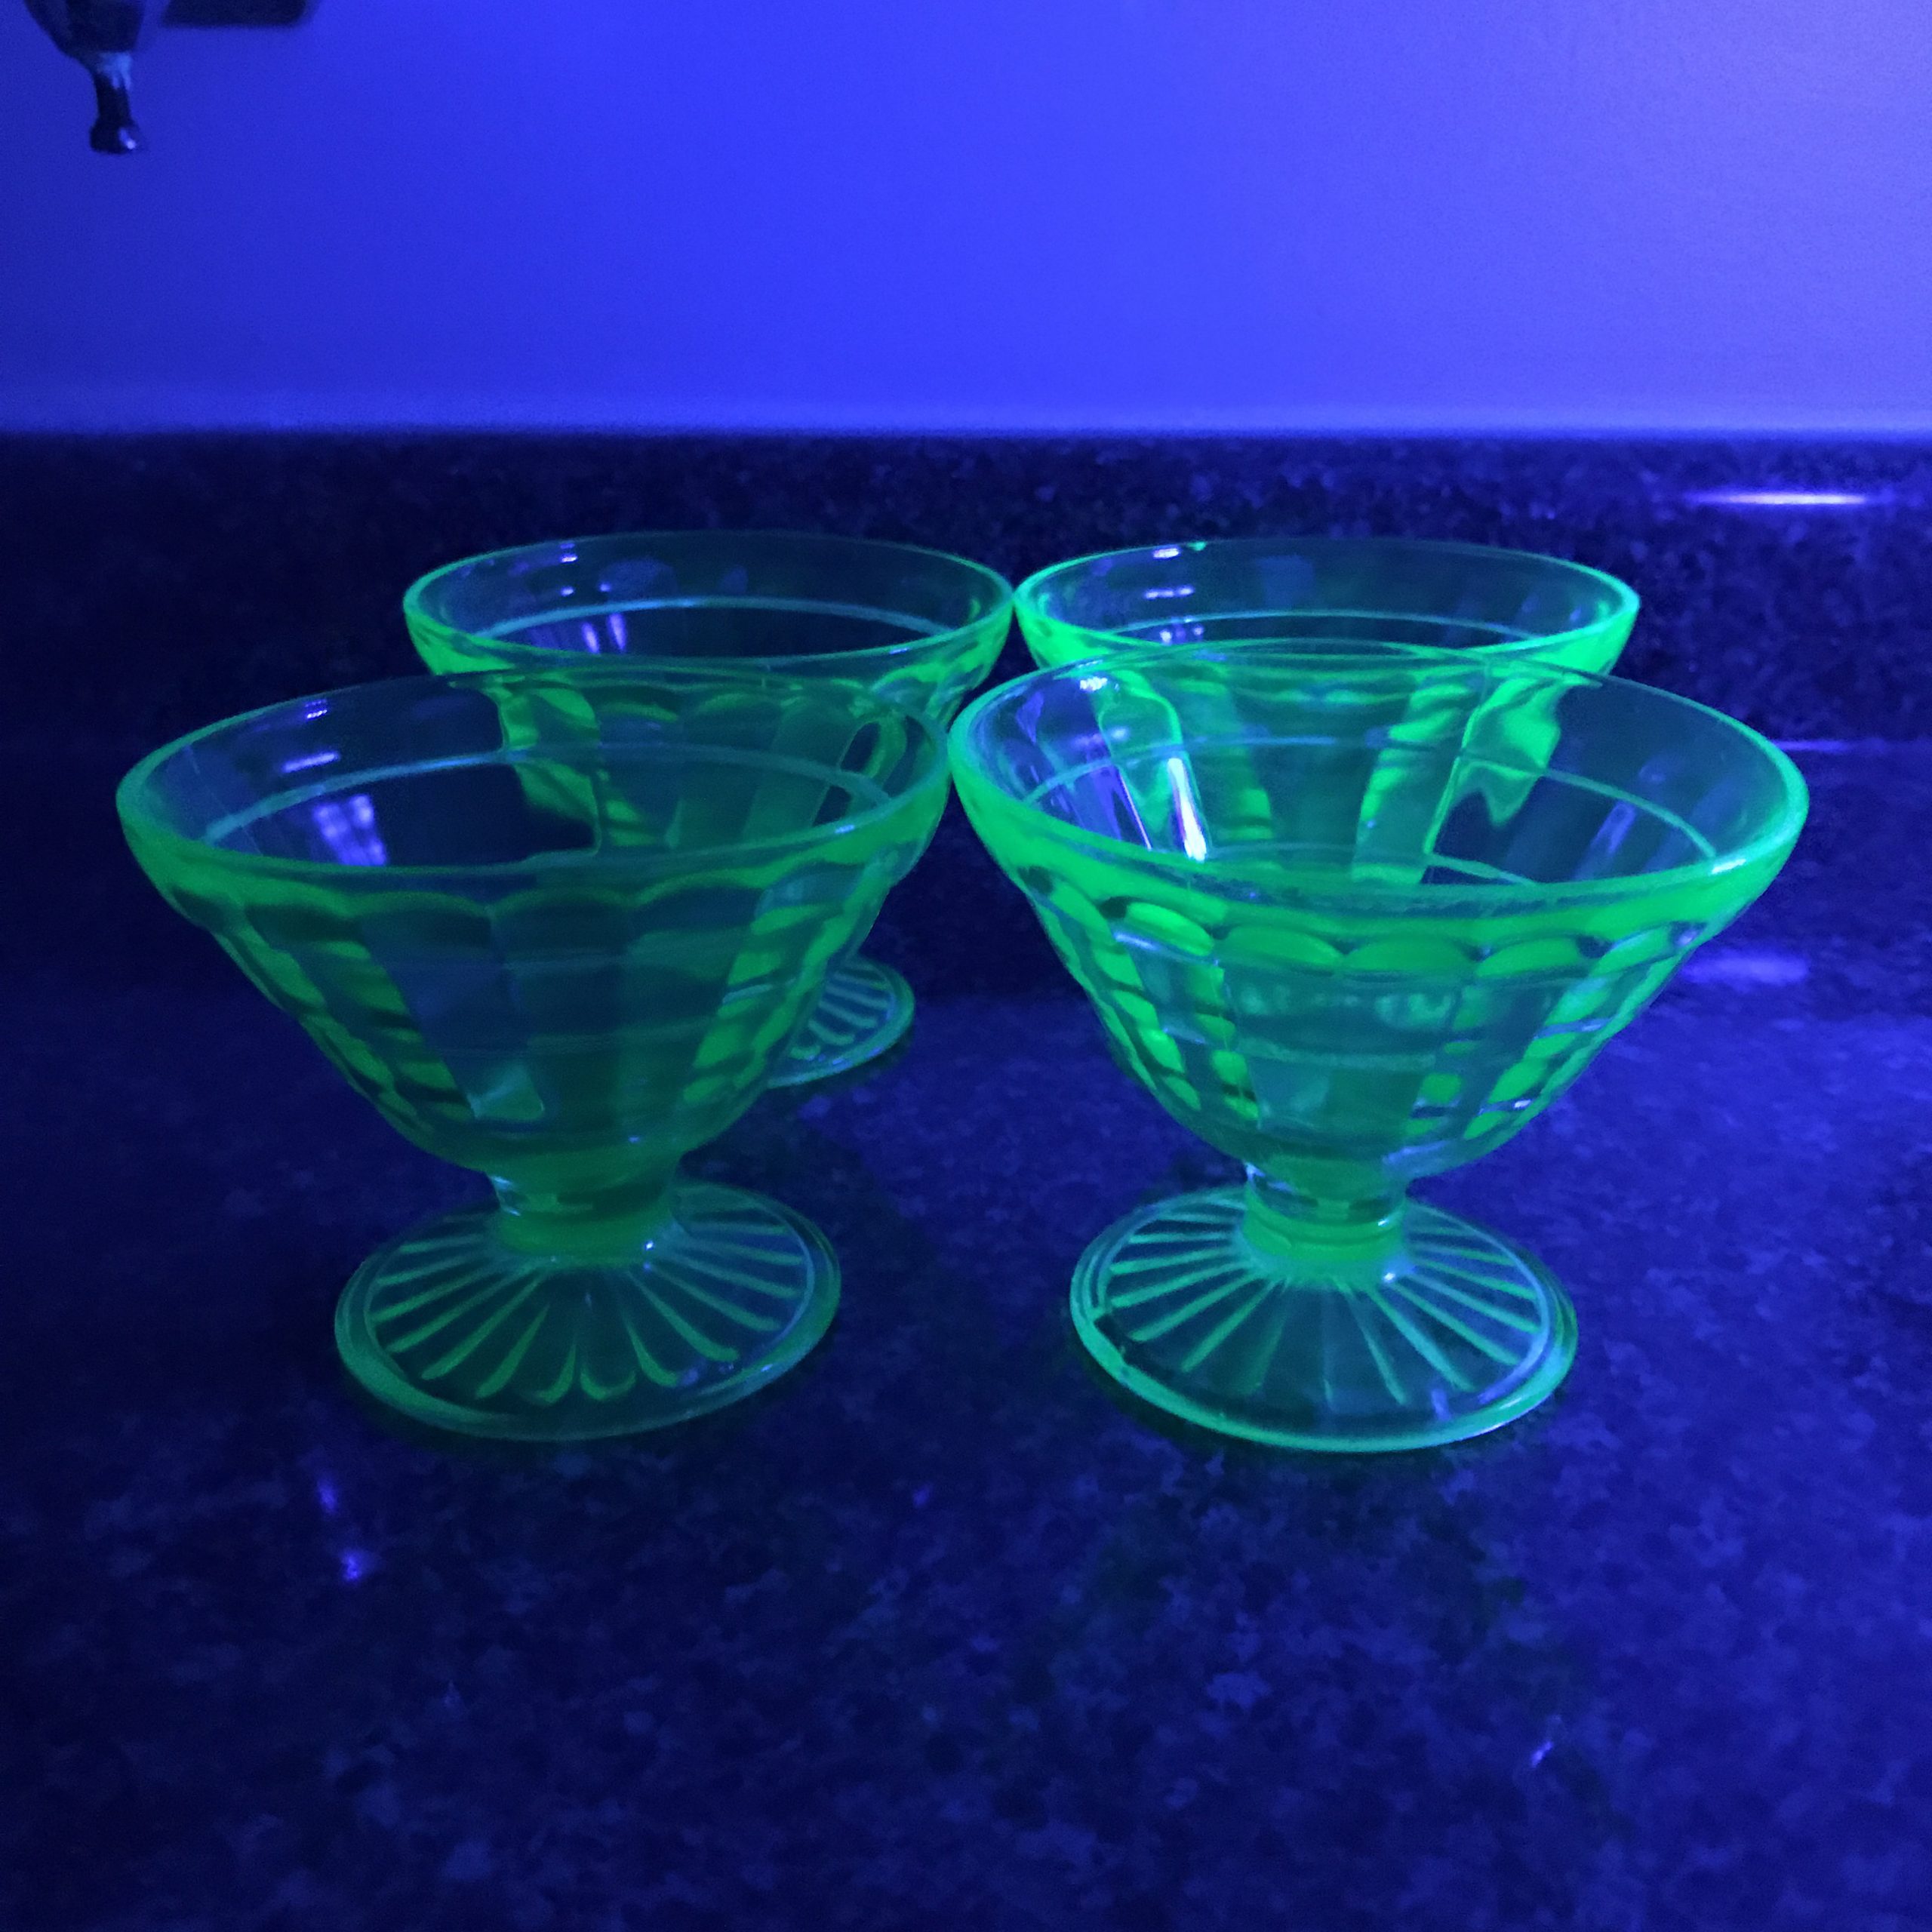 https://www.truevintageantiques.com/wp-content/uploads/2020/03/set-of-4-uranium-glass-sherbet-cups-block-optic-dessert-bowls-fruit-cups-green-glass-farmhouse-collectible-display-kitchen-dining-5e5c4b783-scaled.jpg